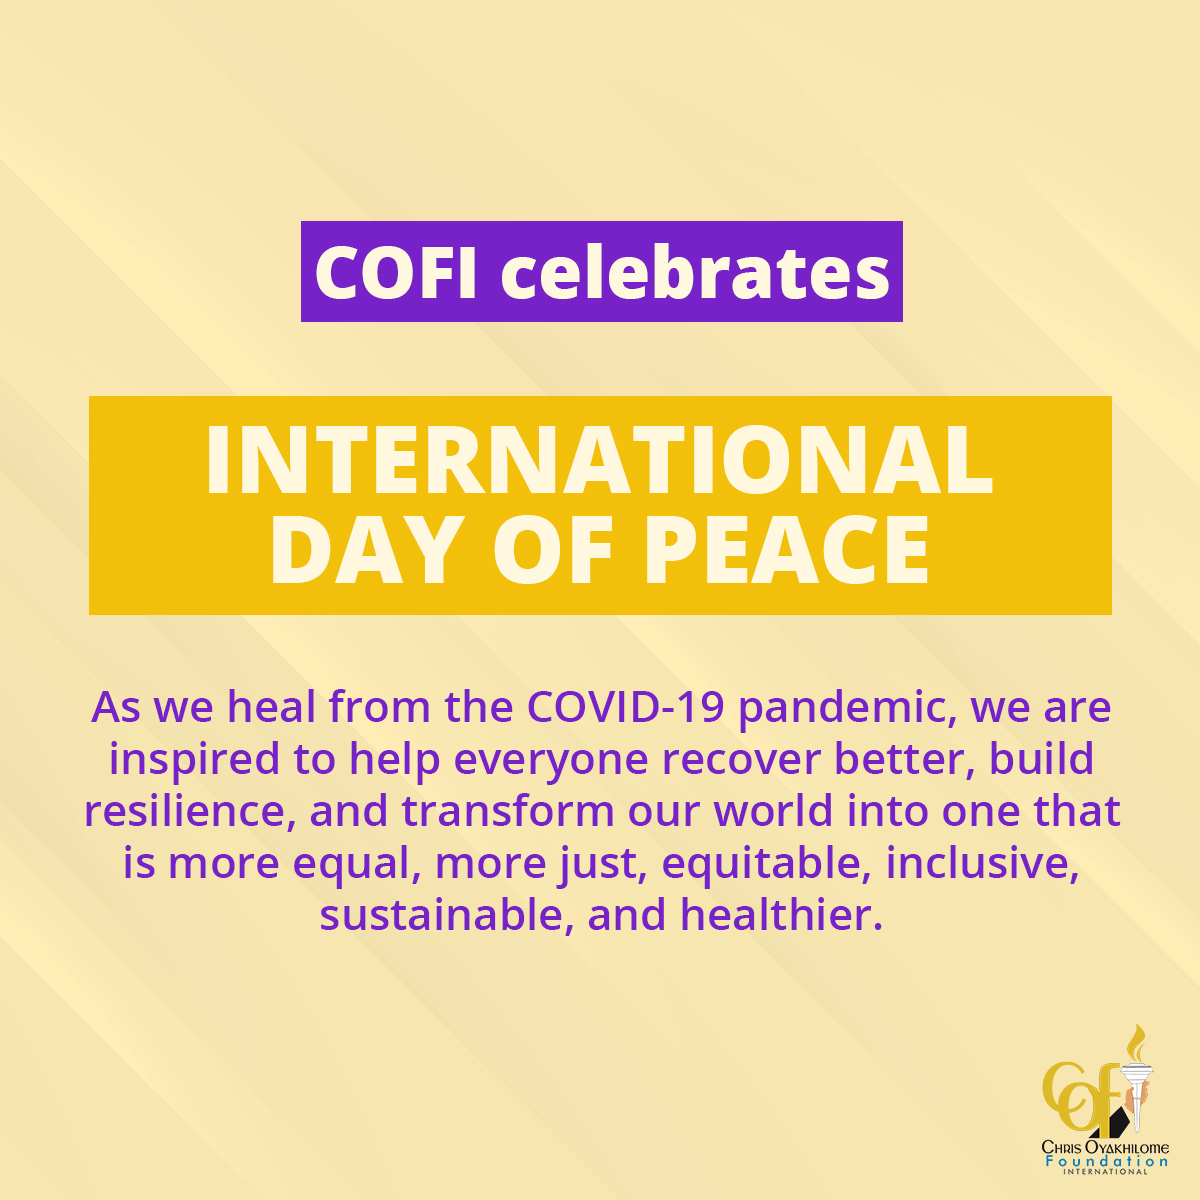 COFI Commemorates the International Day of Peace